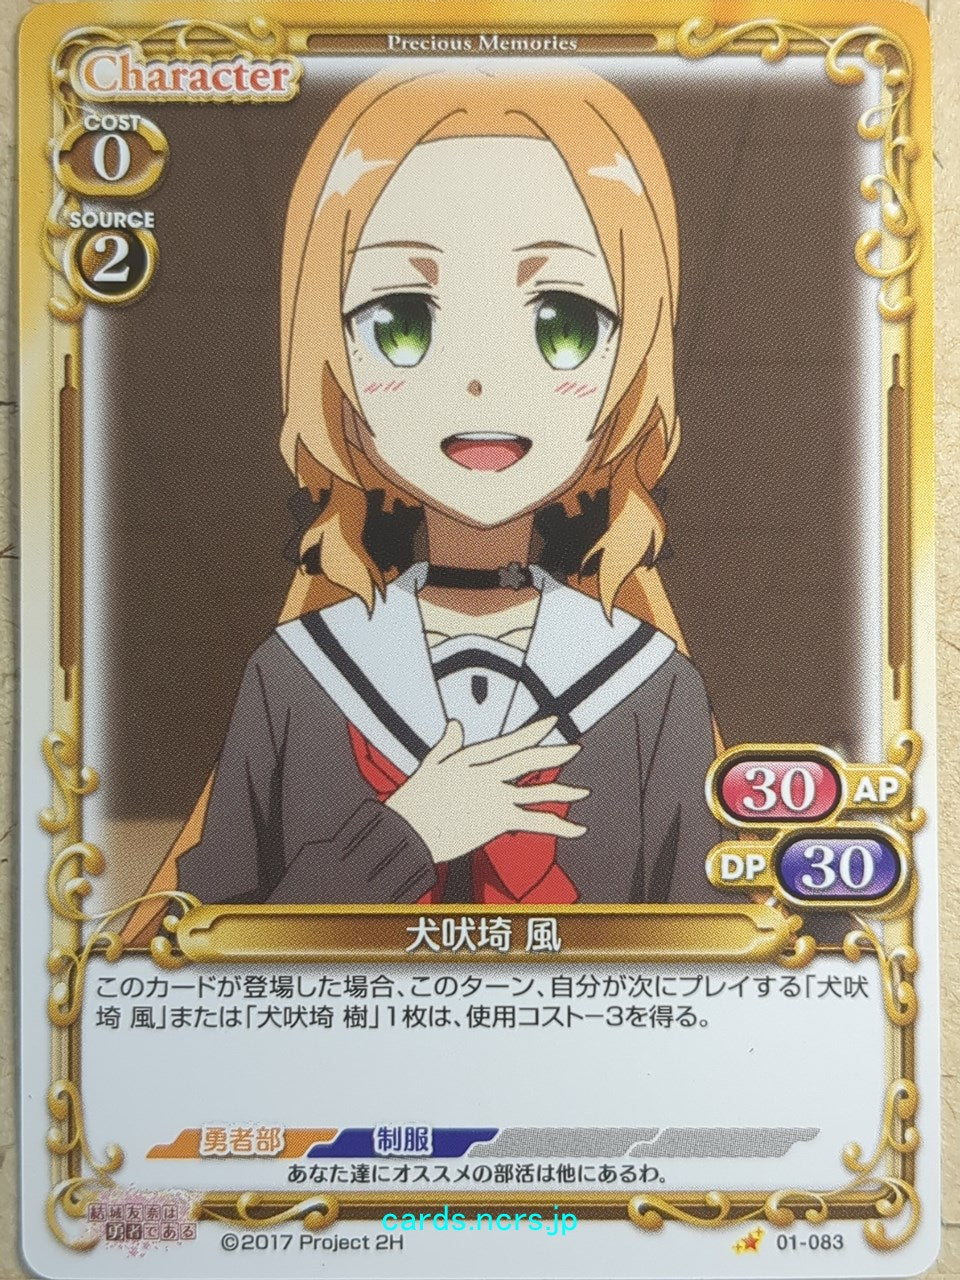 Precious Memories Yuki Yuna is a Hero -Fu Inubozaki-   Trading Card PM/YUU-01-083